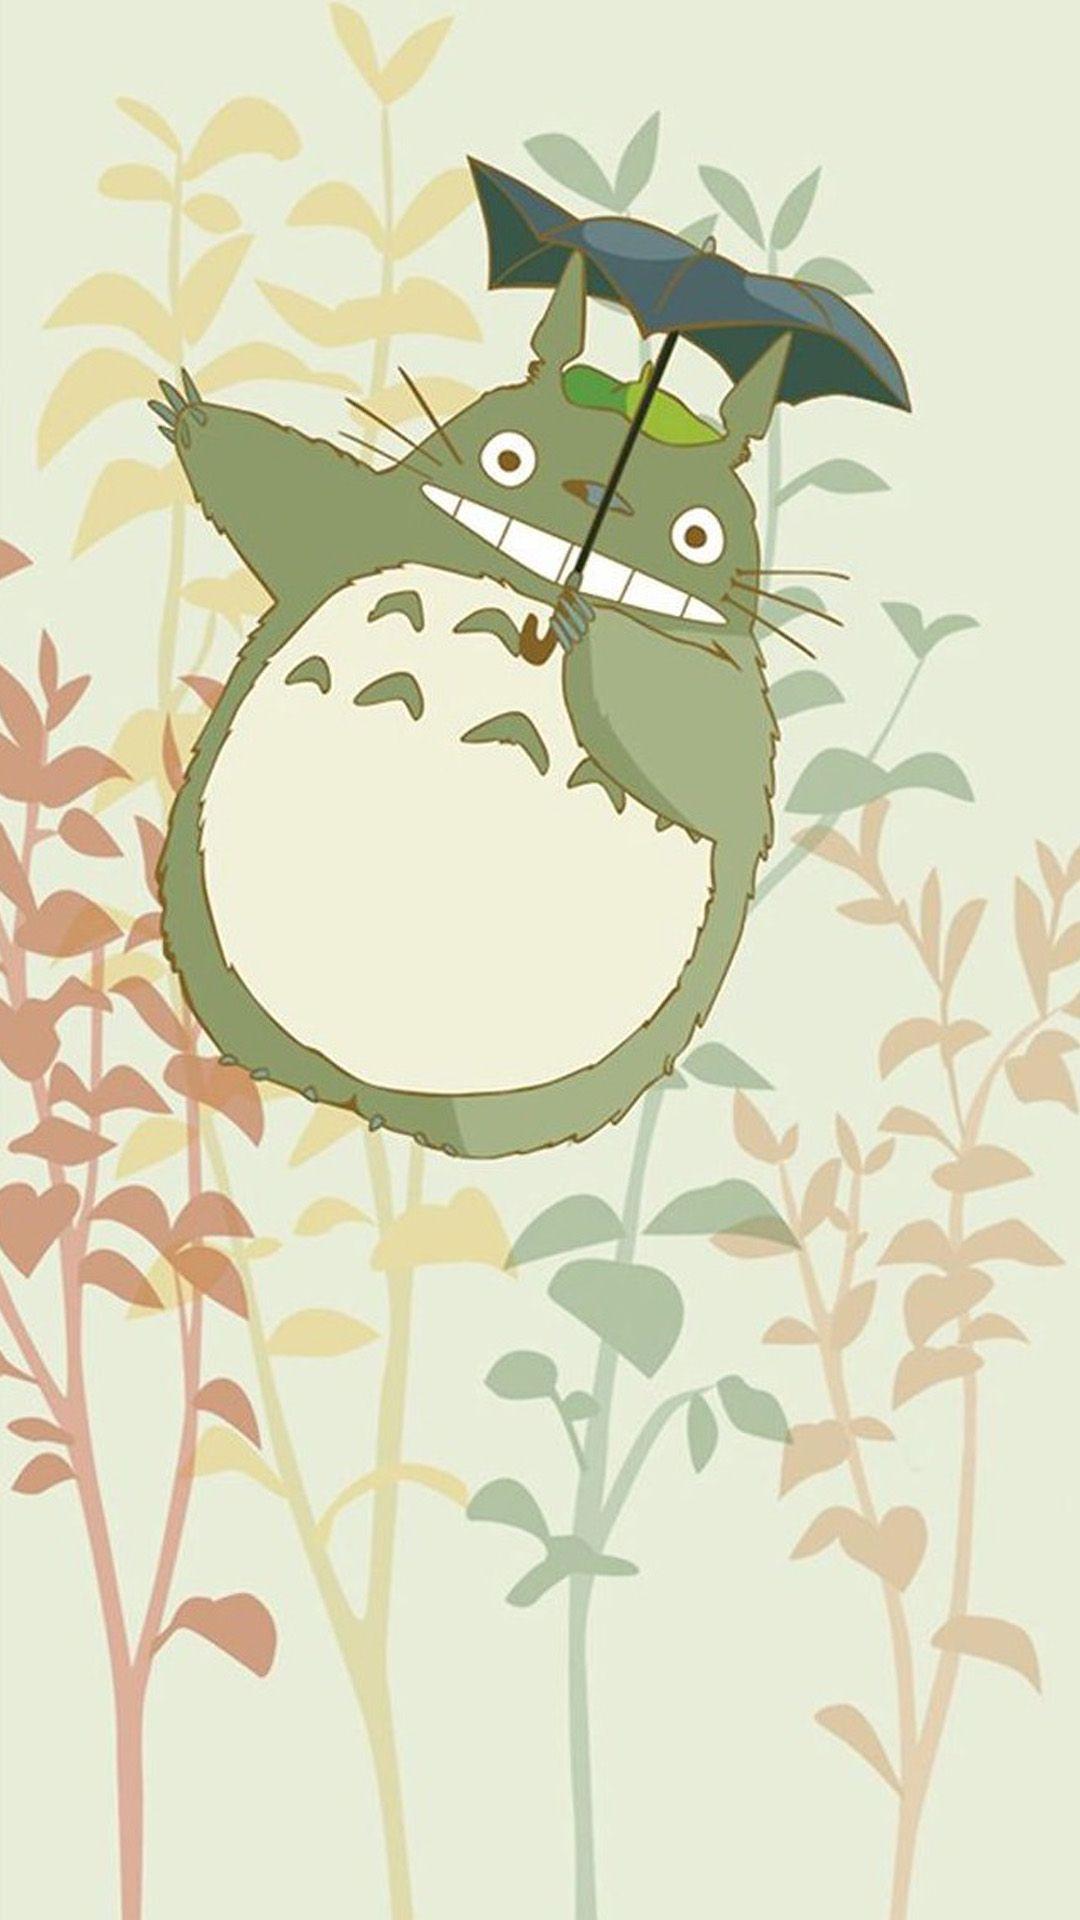 Cute My Neighbor Totoro iPhone 6 wallpaper. Wallpaper